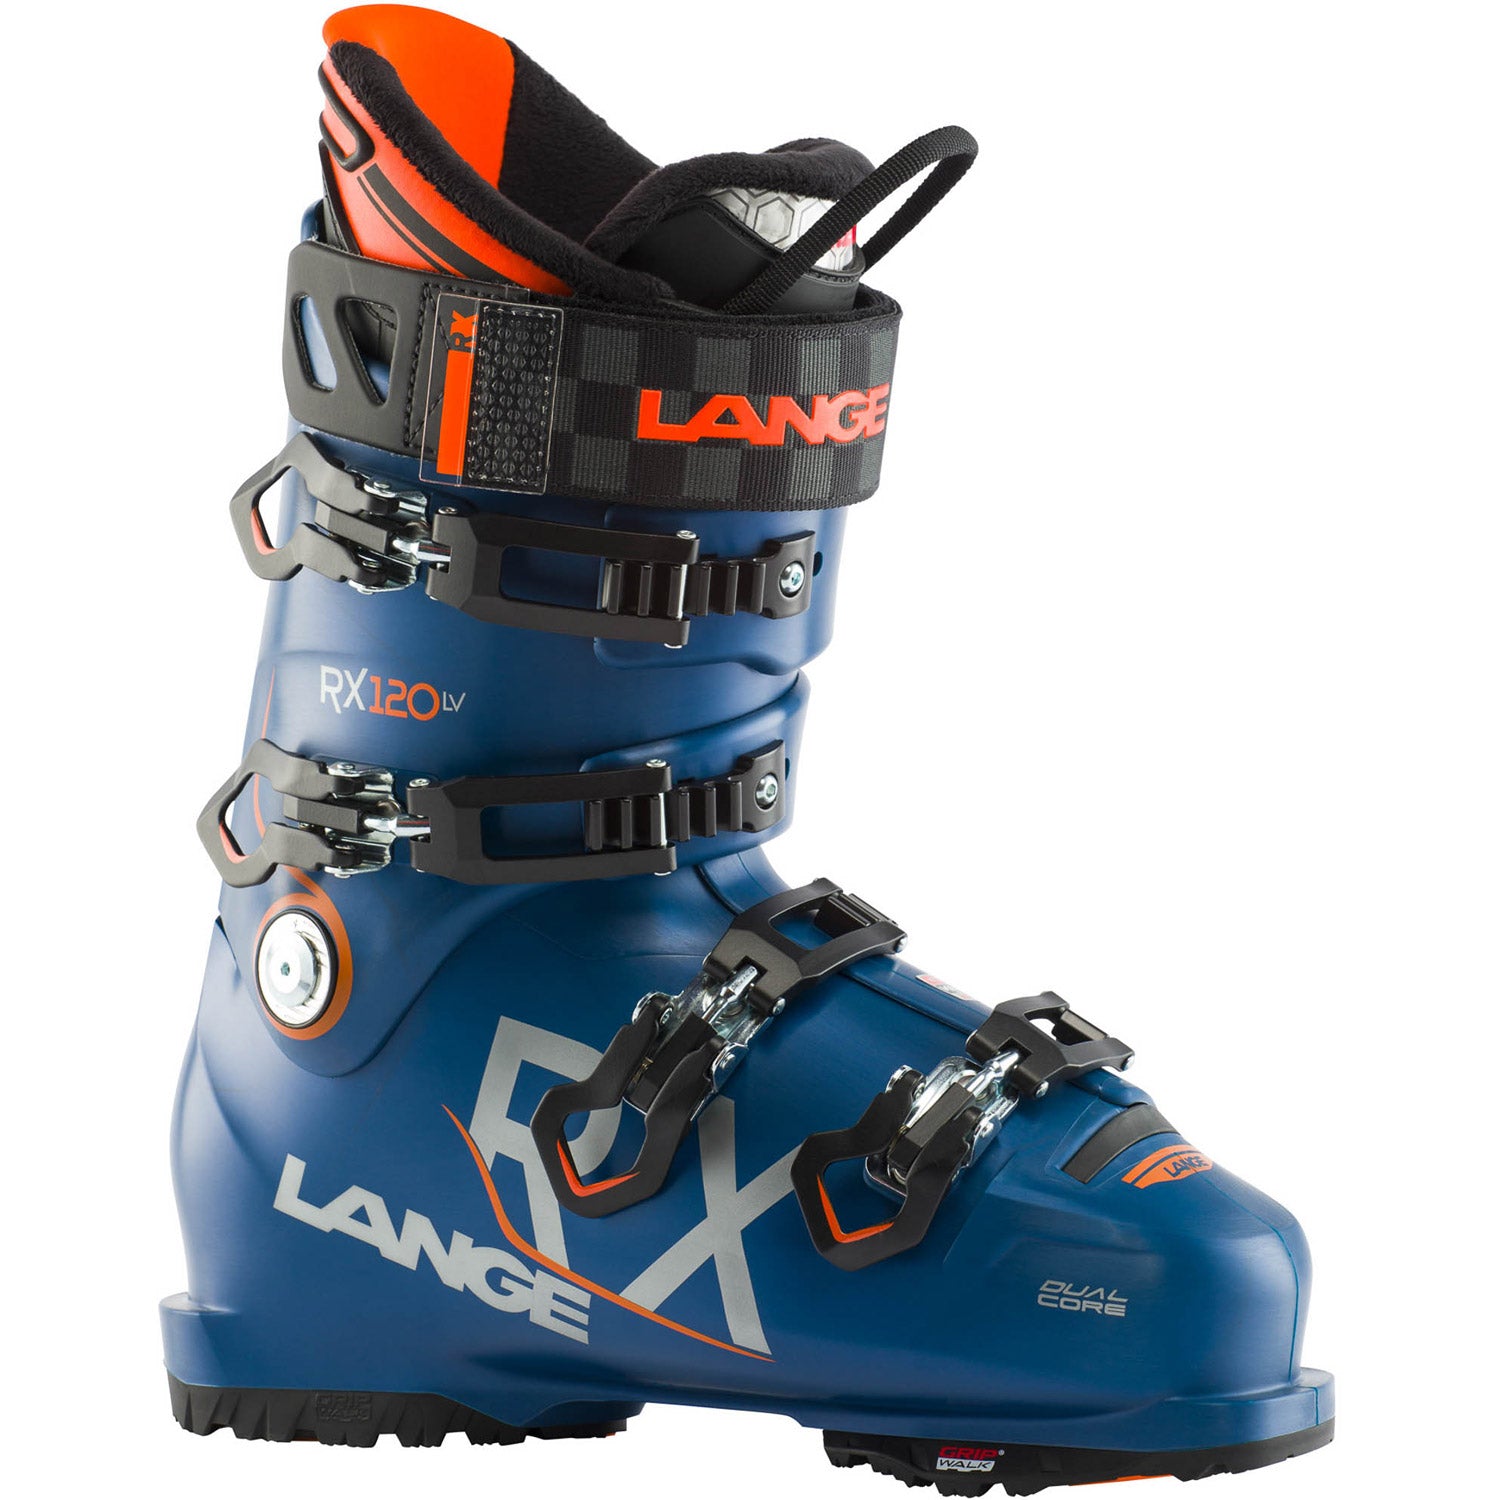 RX 120 LV Ski Boot 2021